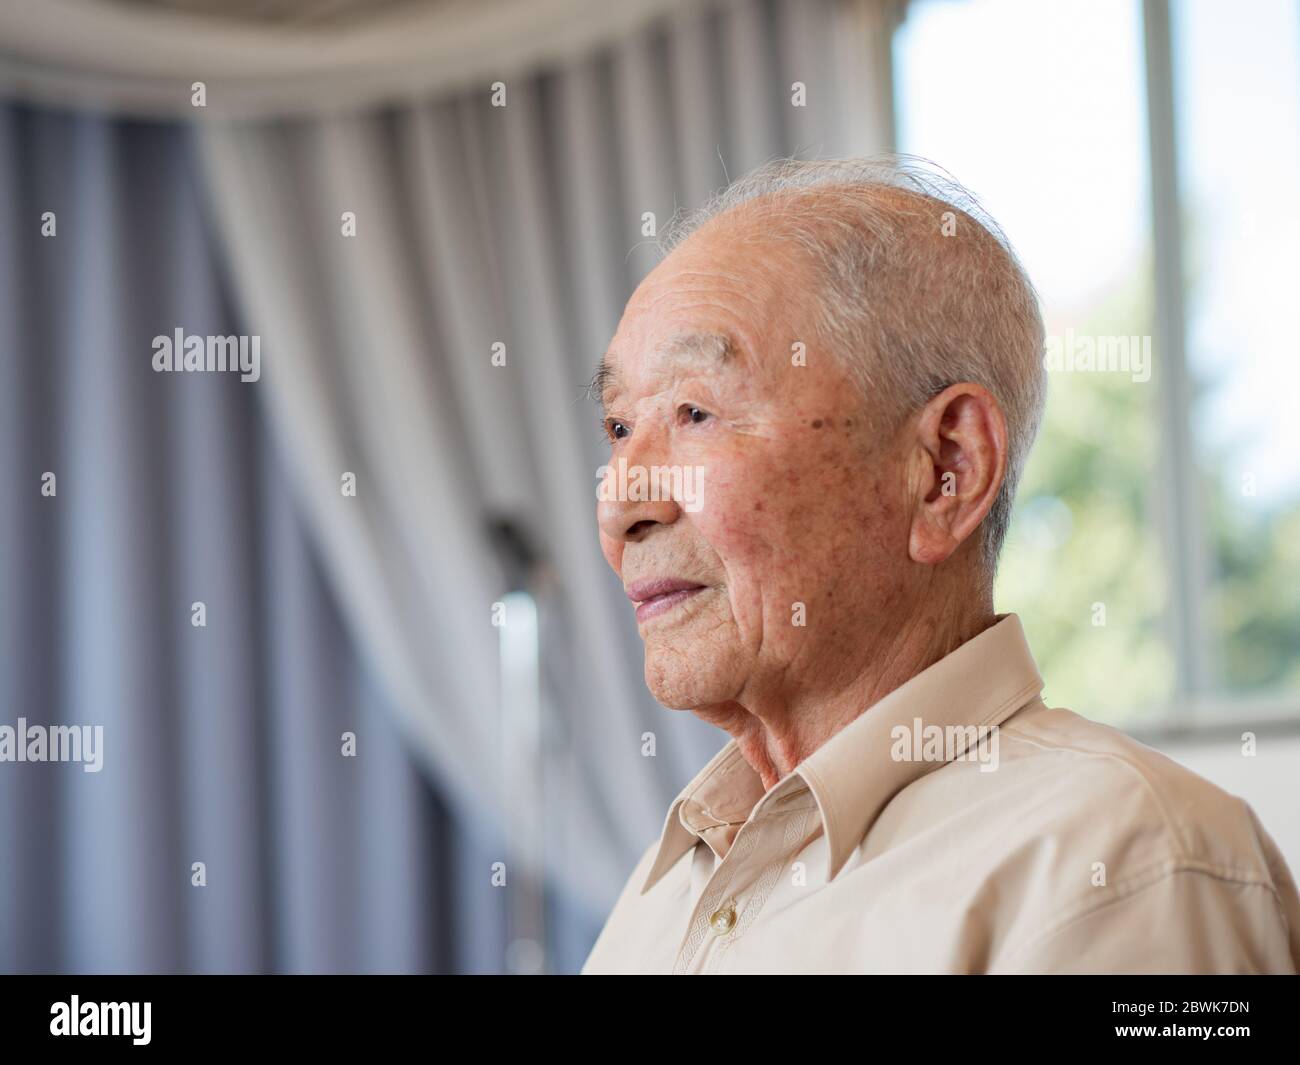 A healthy senior citizen looking off camera Stock Photo